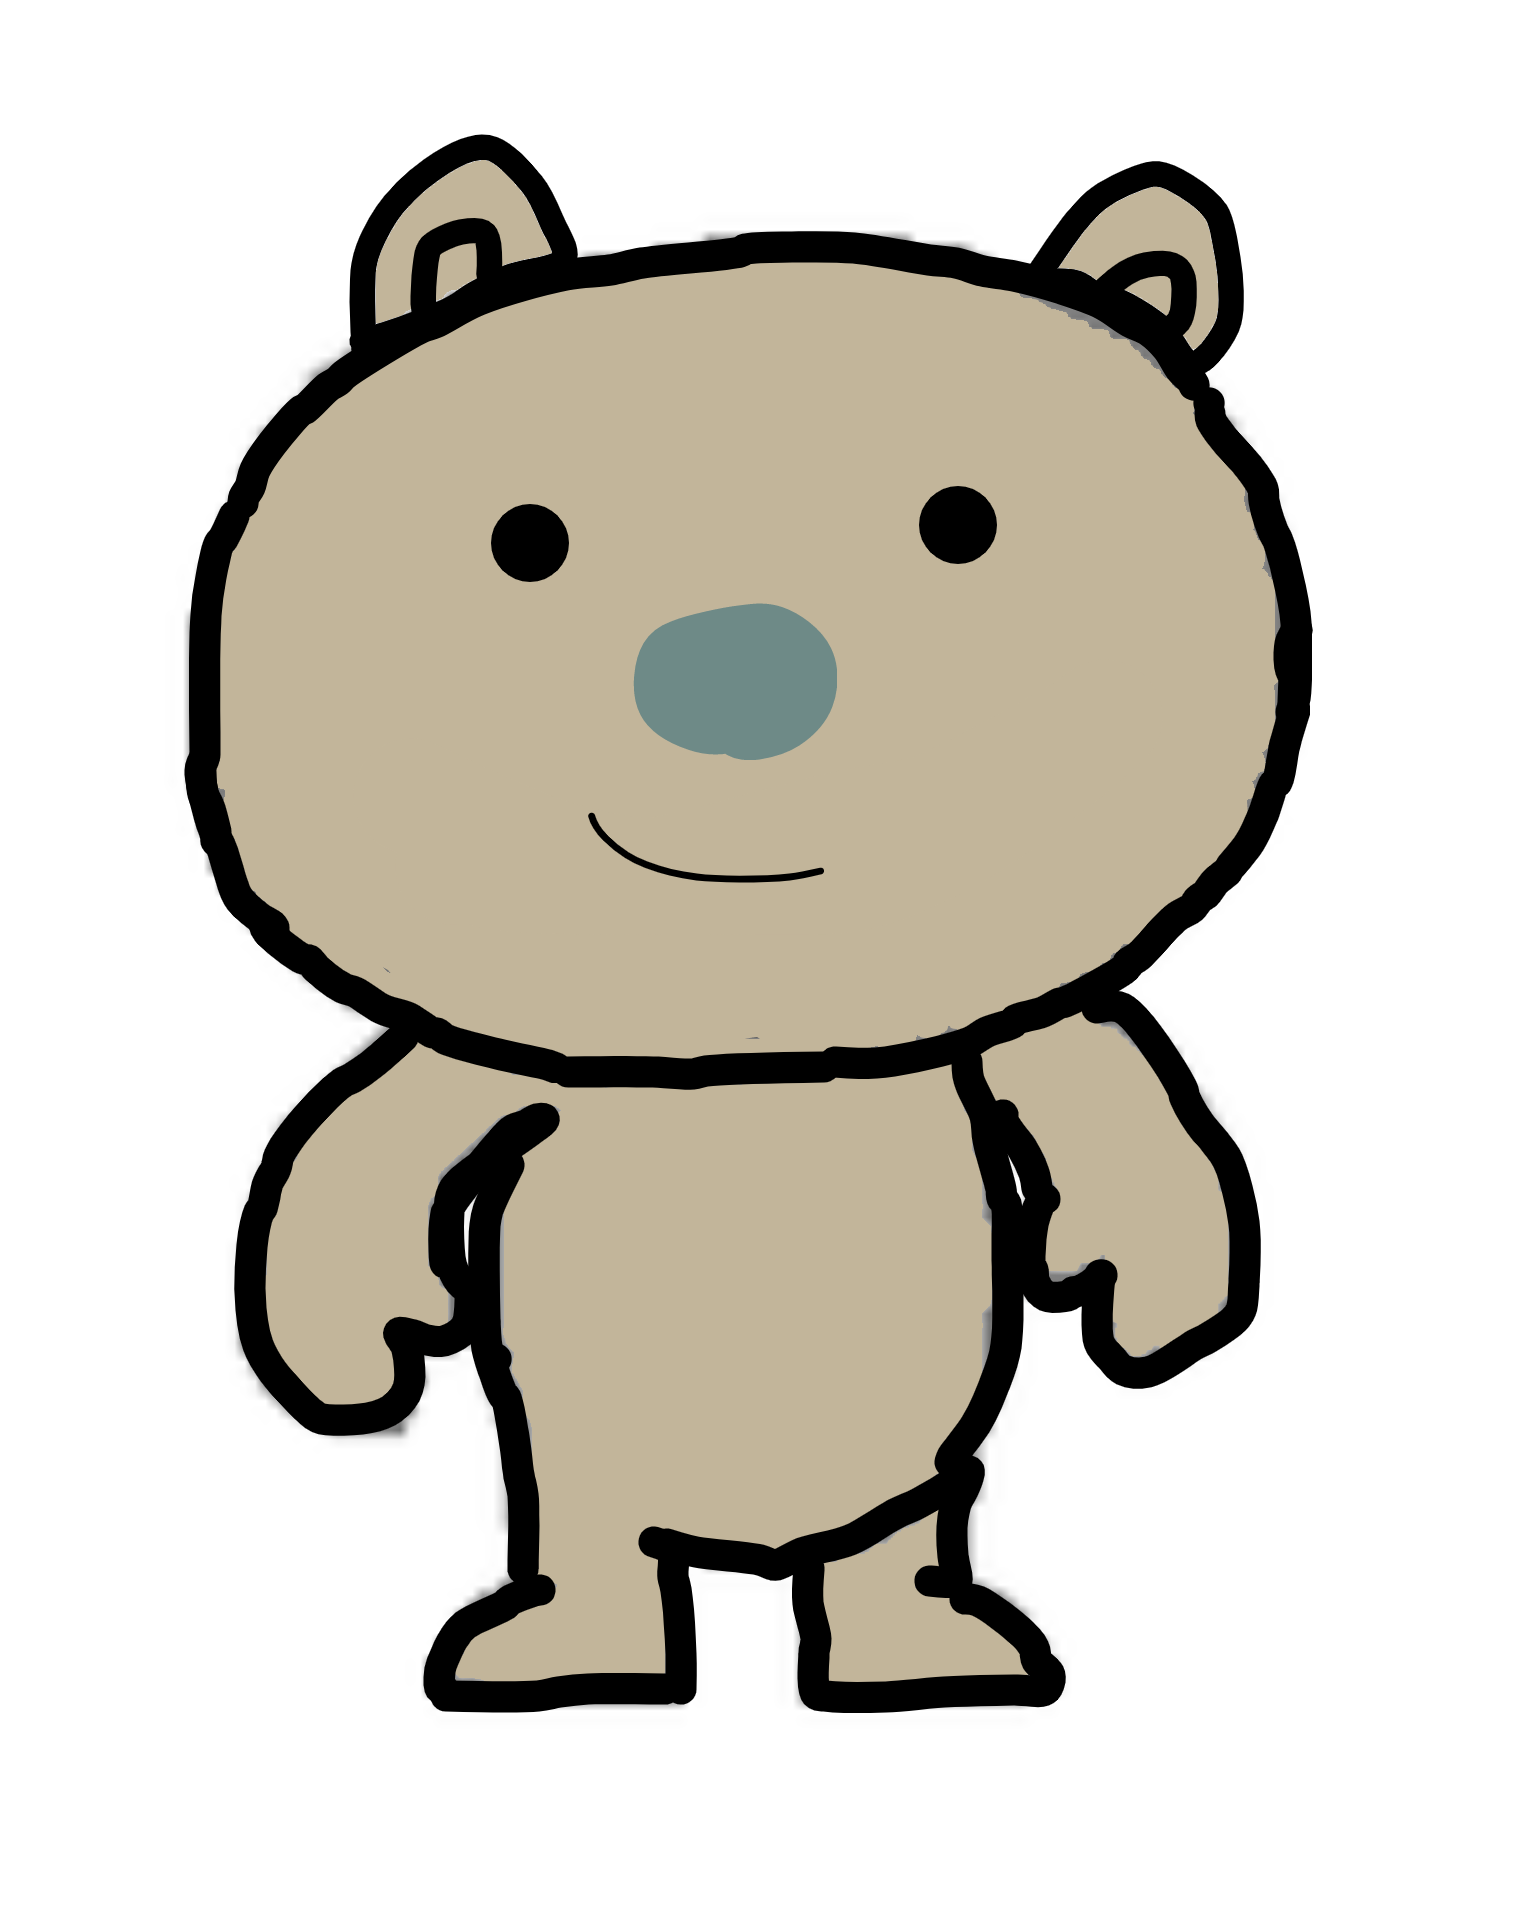 BEAR * Icons, Roblox BEAR Wiki